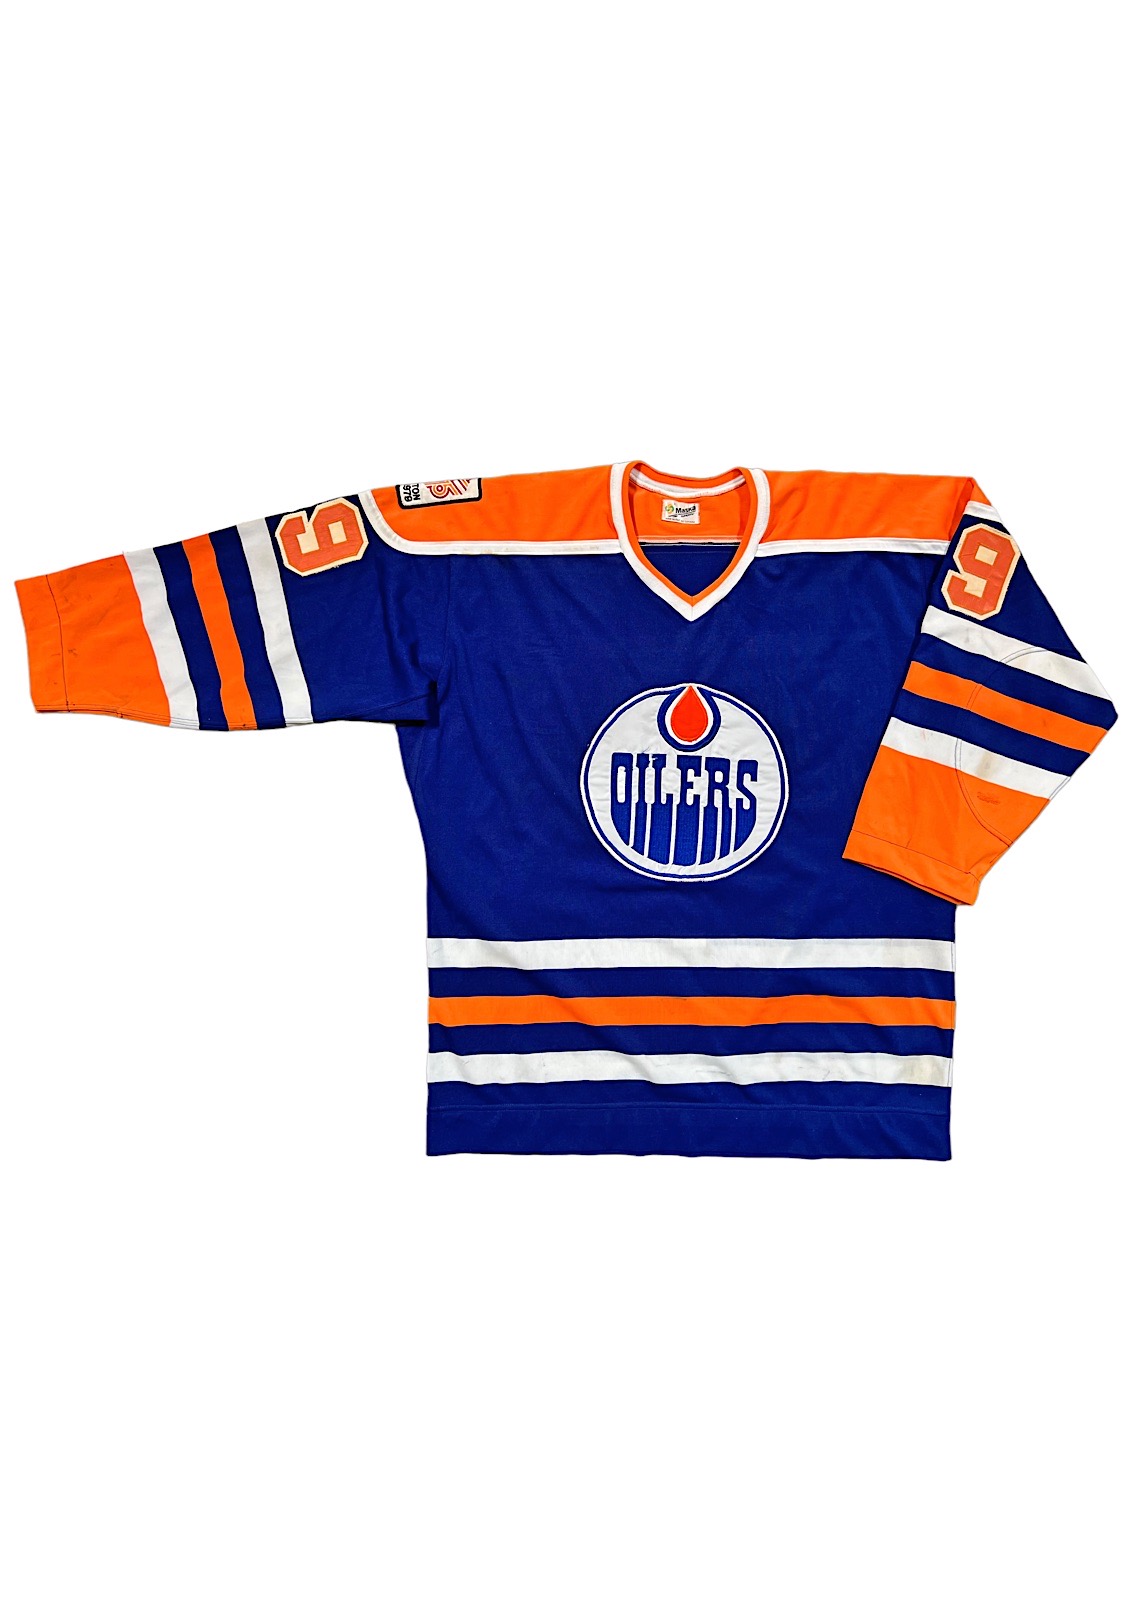 WAYNE GRETZKY  Edmonton Oilers 1978 K1 WHA Throwback Hockey Jersey